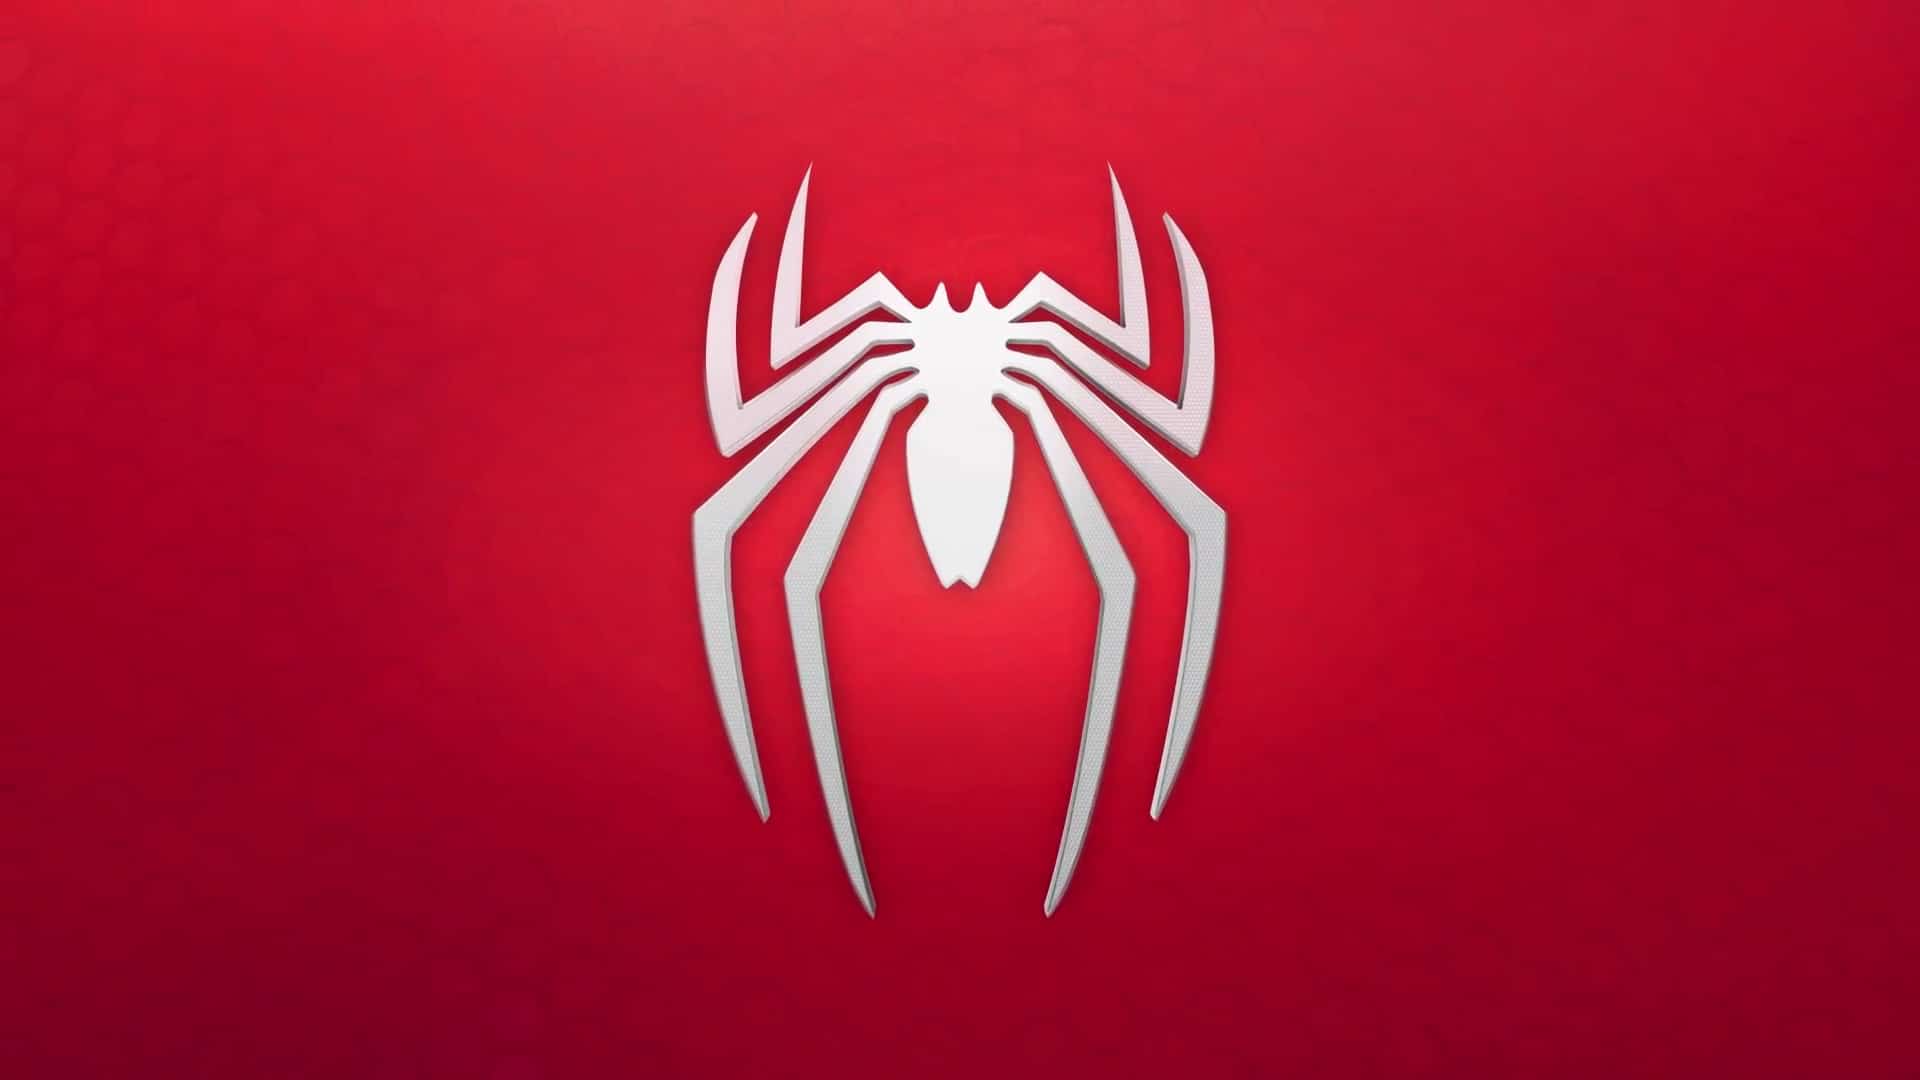 Spider-Man PS4 Logo - 1920 x 1080 jpeg 523kB